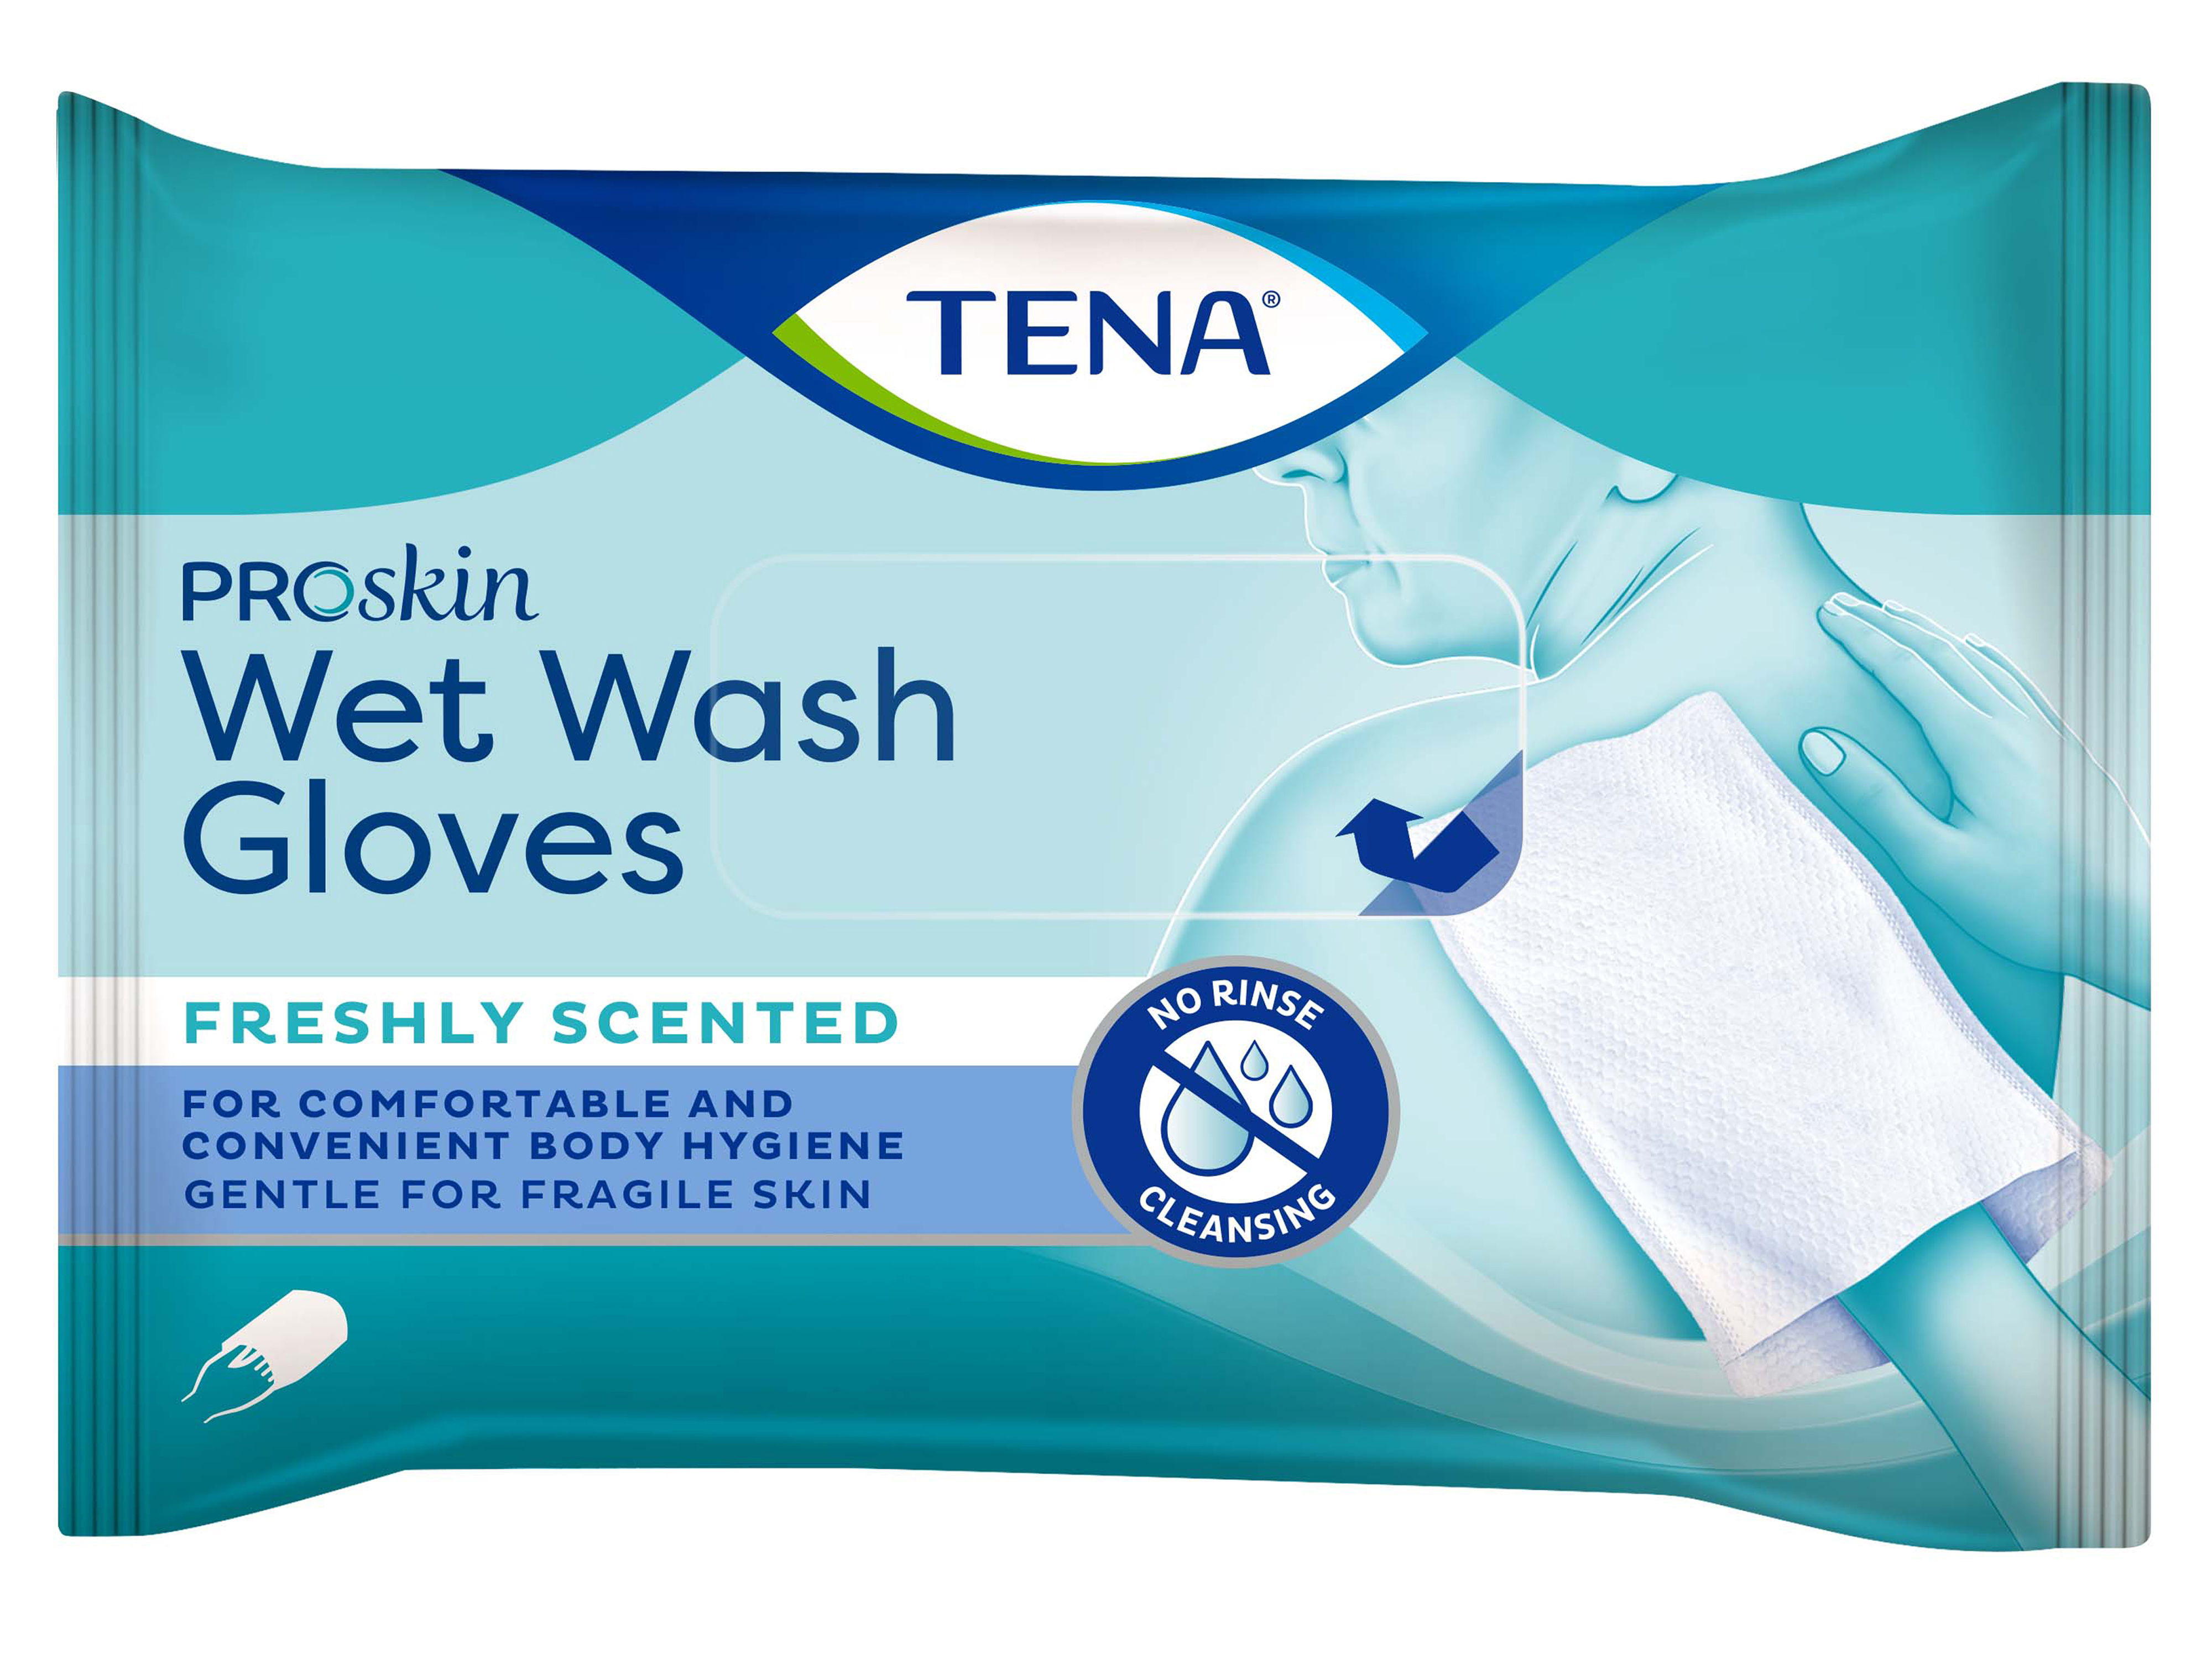 Tena Proskin Wet Wash Glove, 8 stk